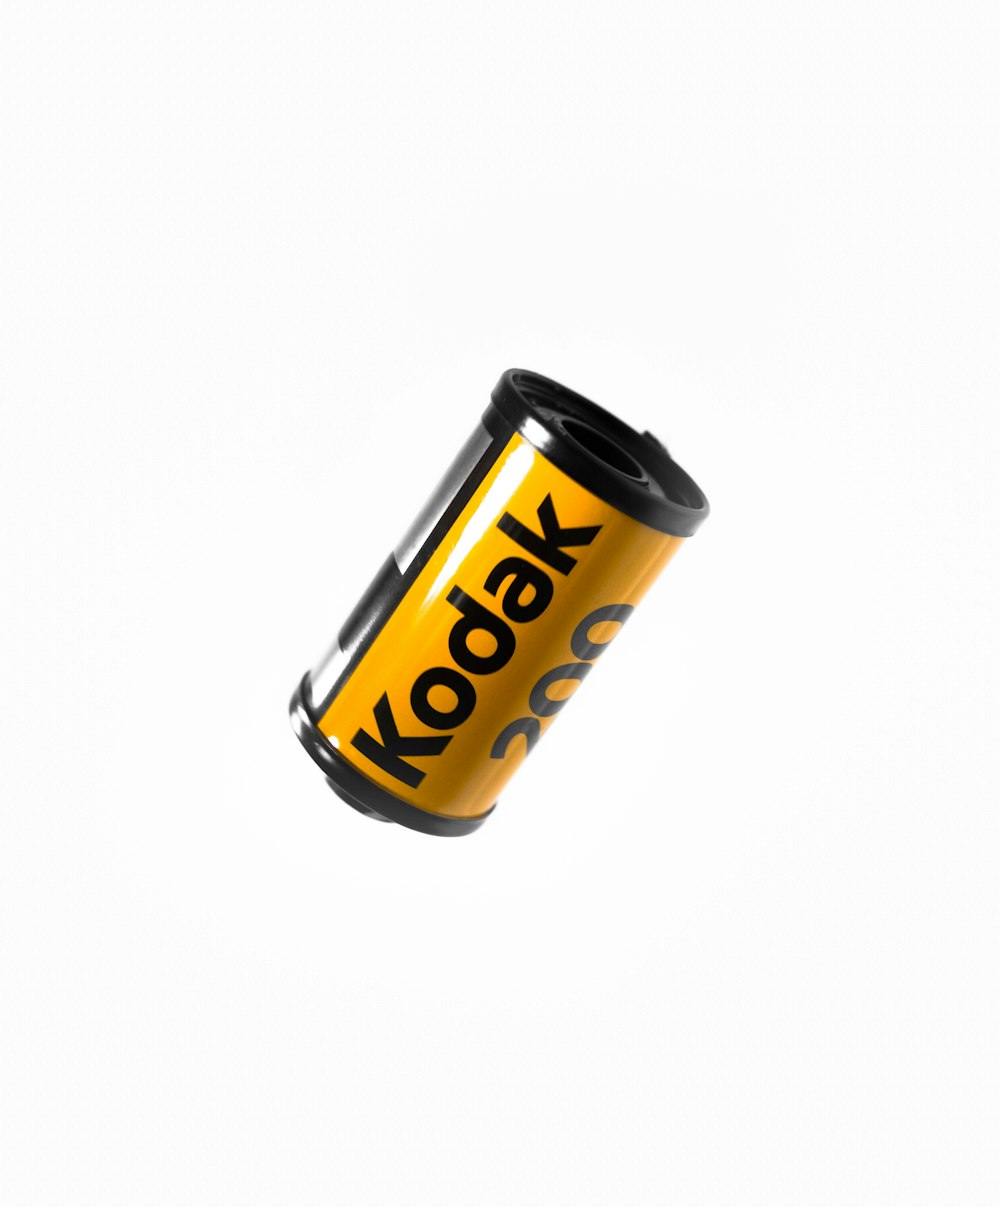 Pellicola per fotocamera Kodak